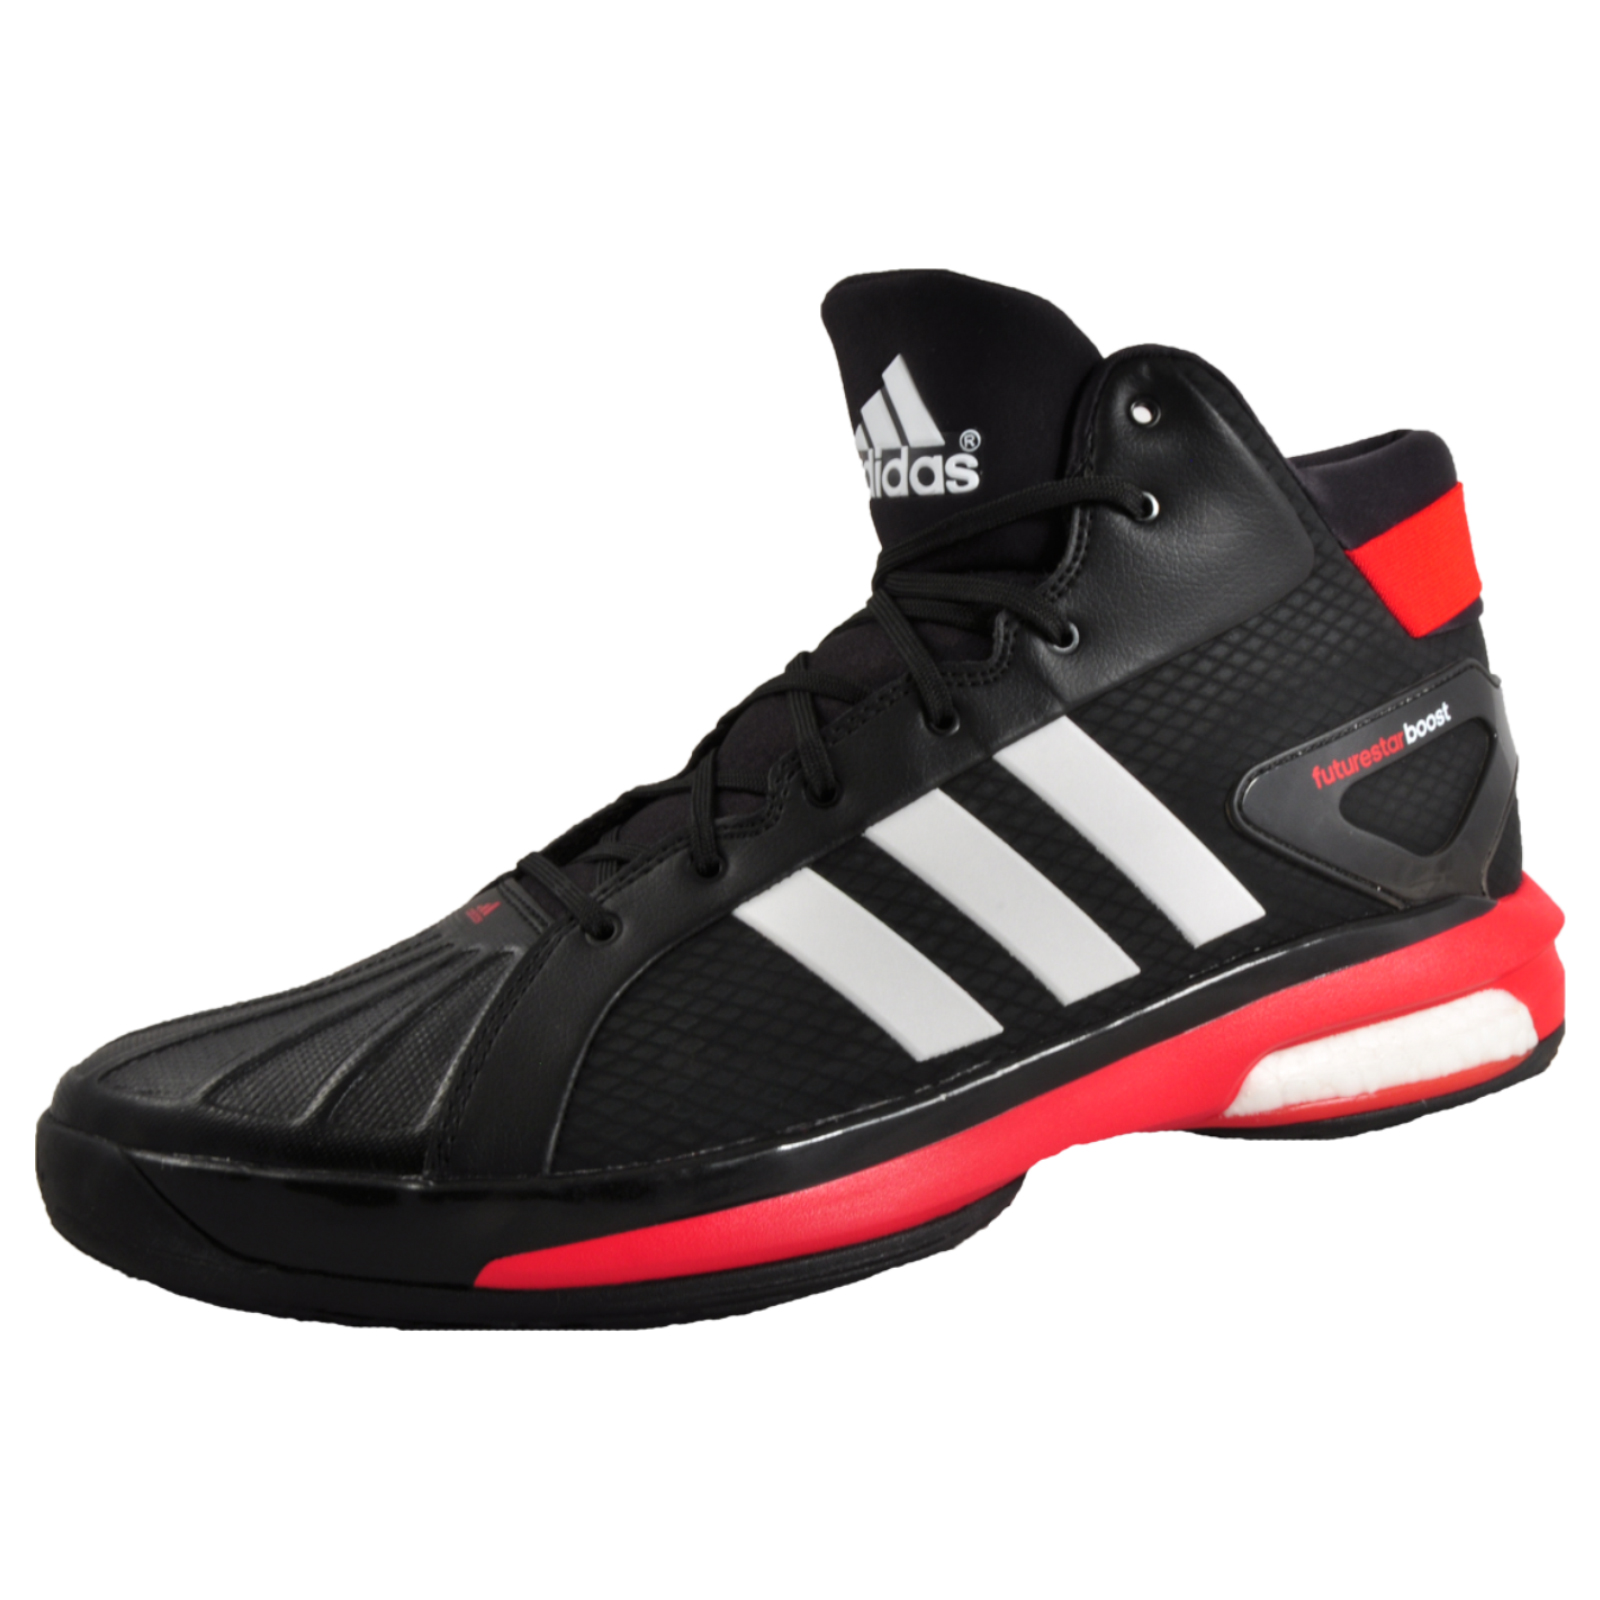 Adidas Futurestar Boost Men's Basketball Fitness Trainers Black | eBay